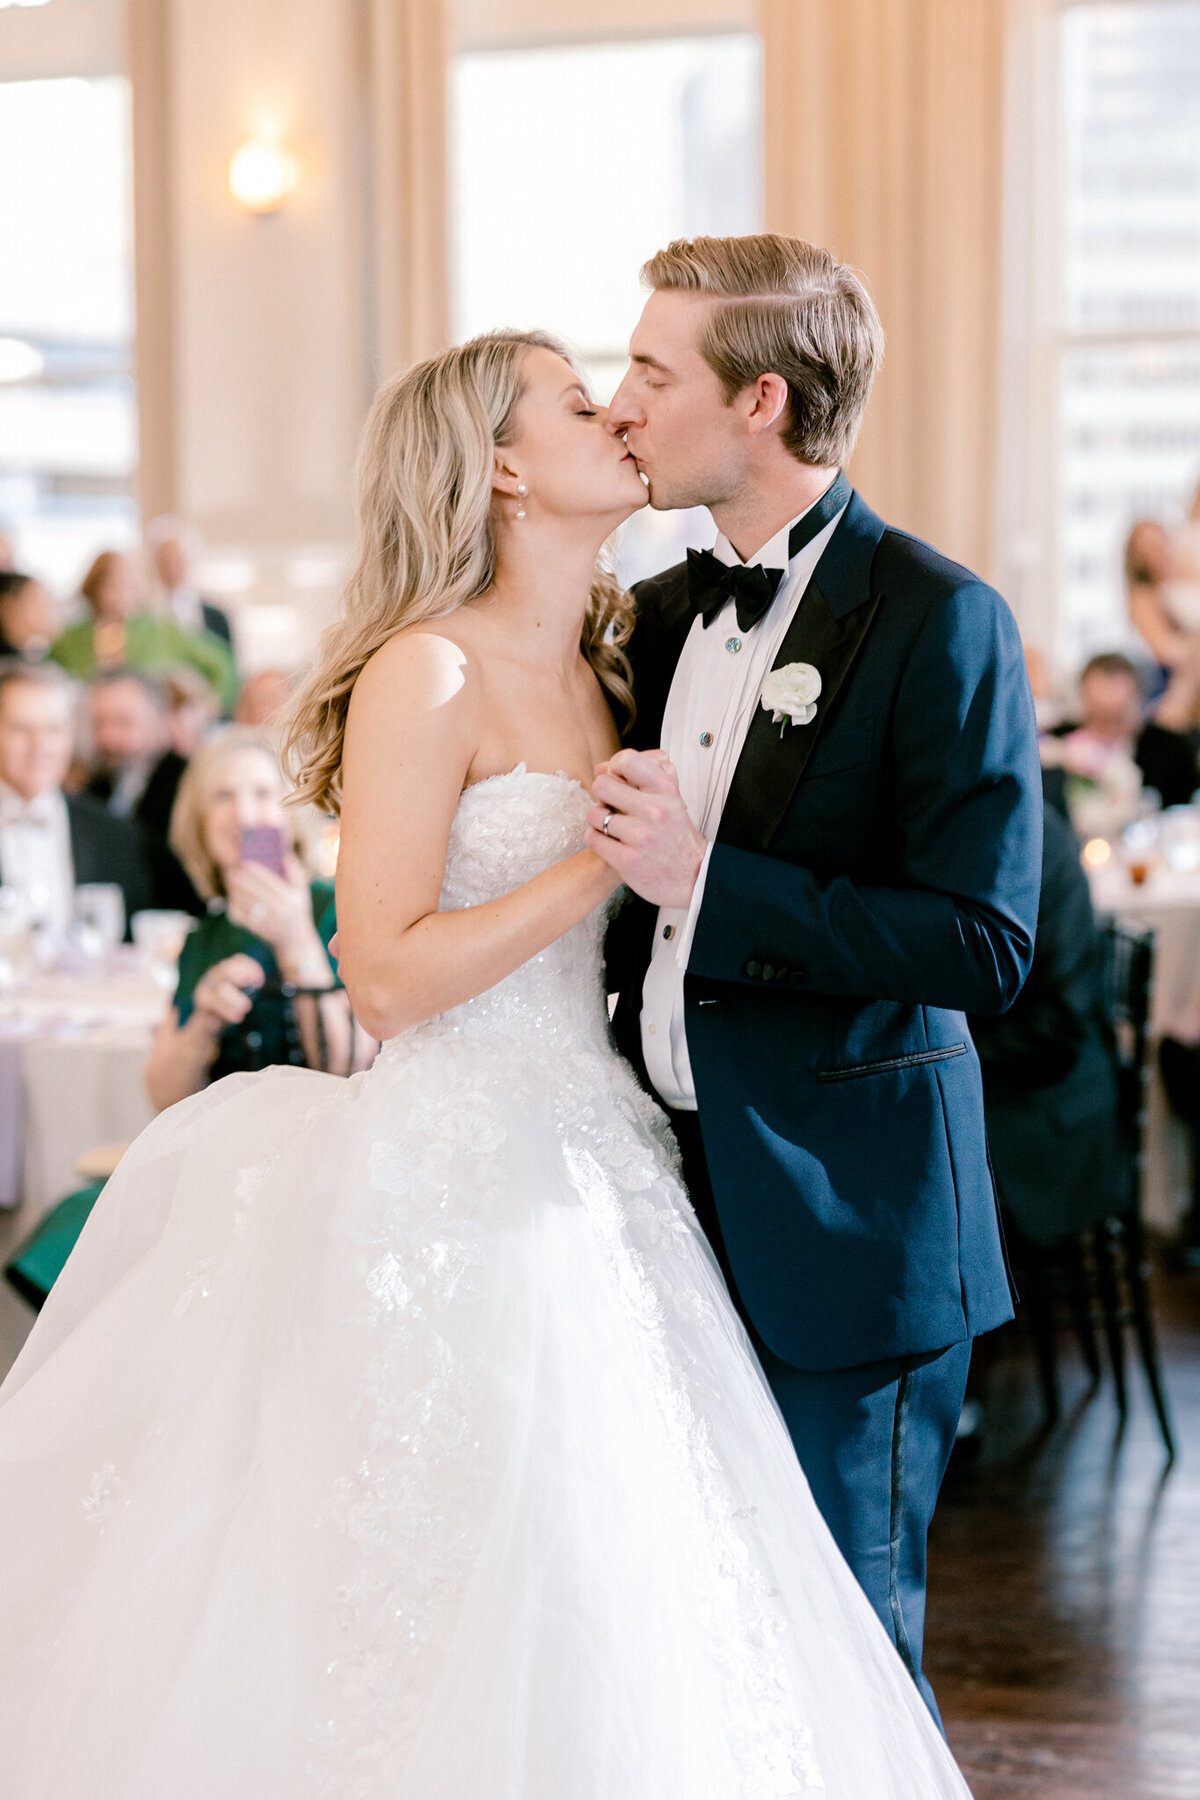 Shelby & Thomas's Wedding at HPUMC The Room on Main | Dallas Wedding Photographer | Sami Kathryn Photography-189